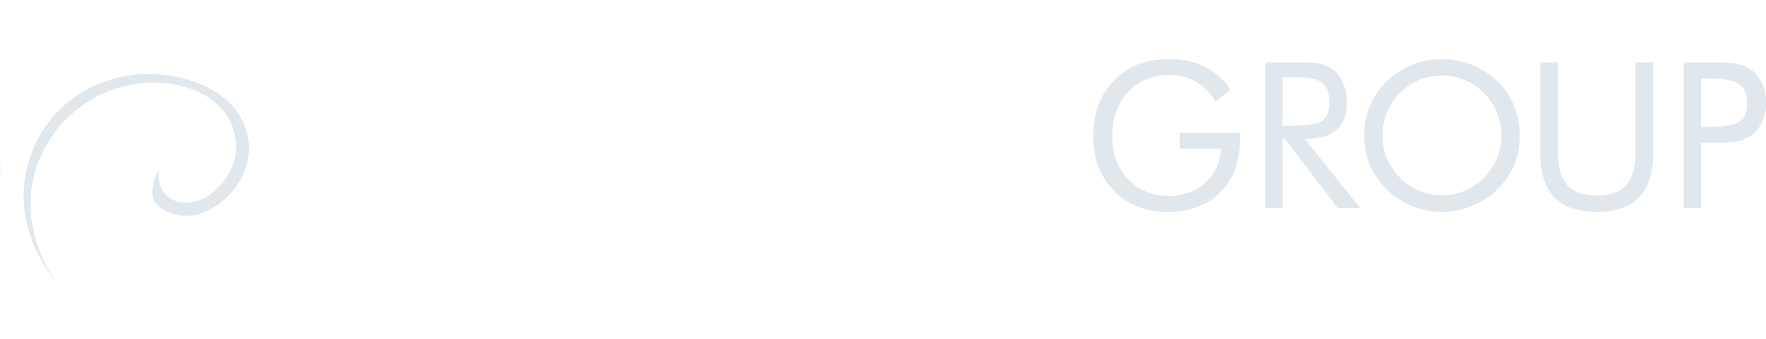 Turner Technologies